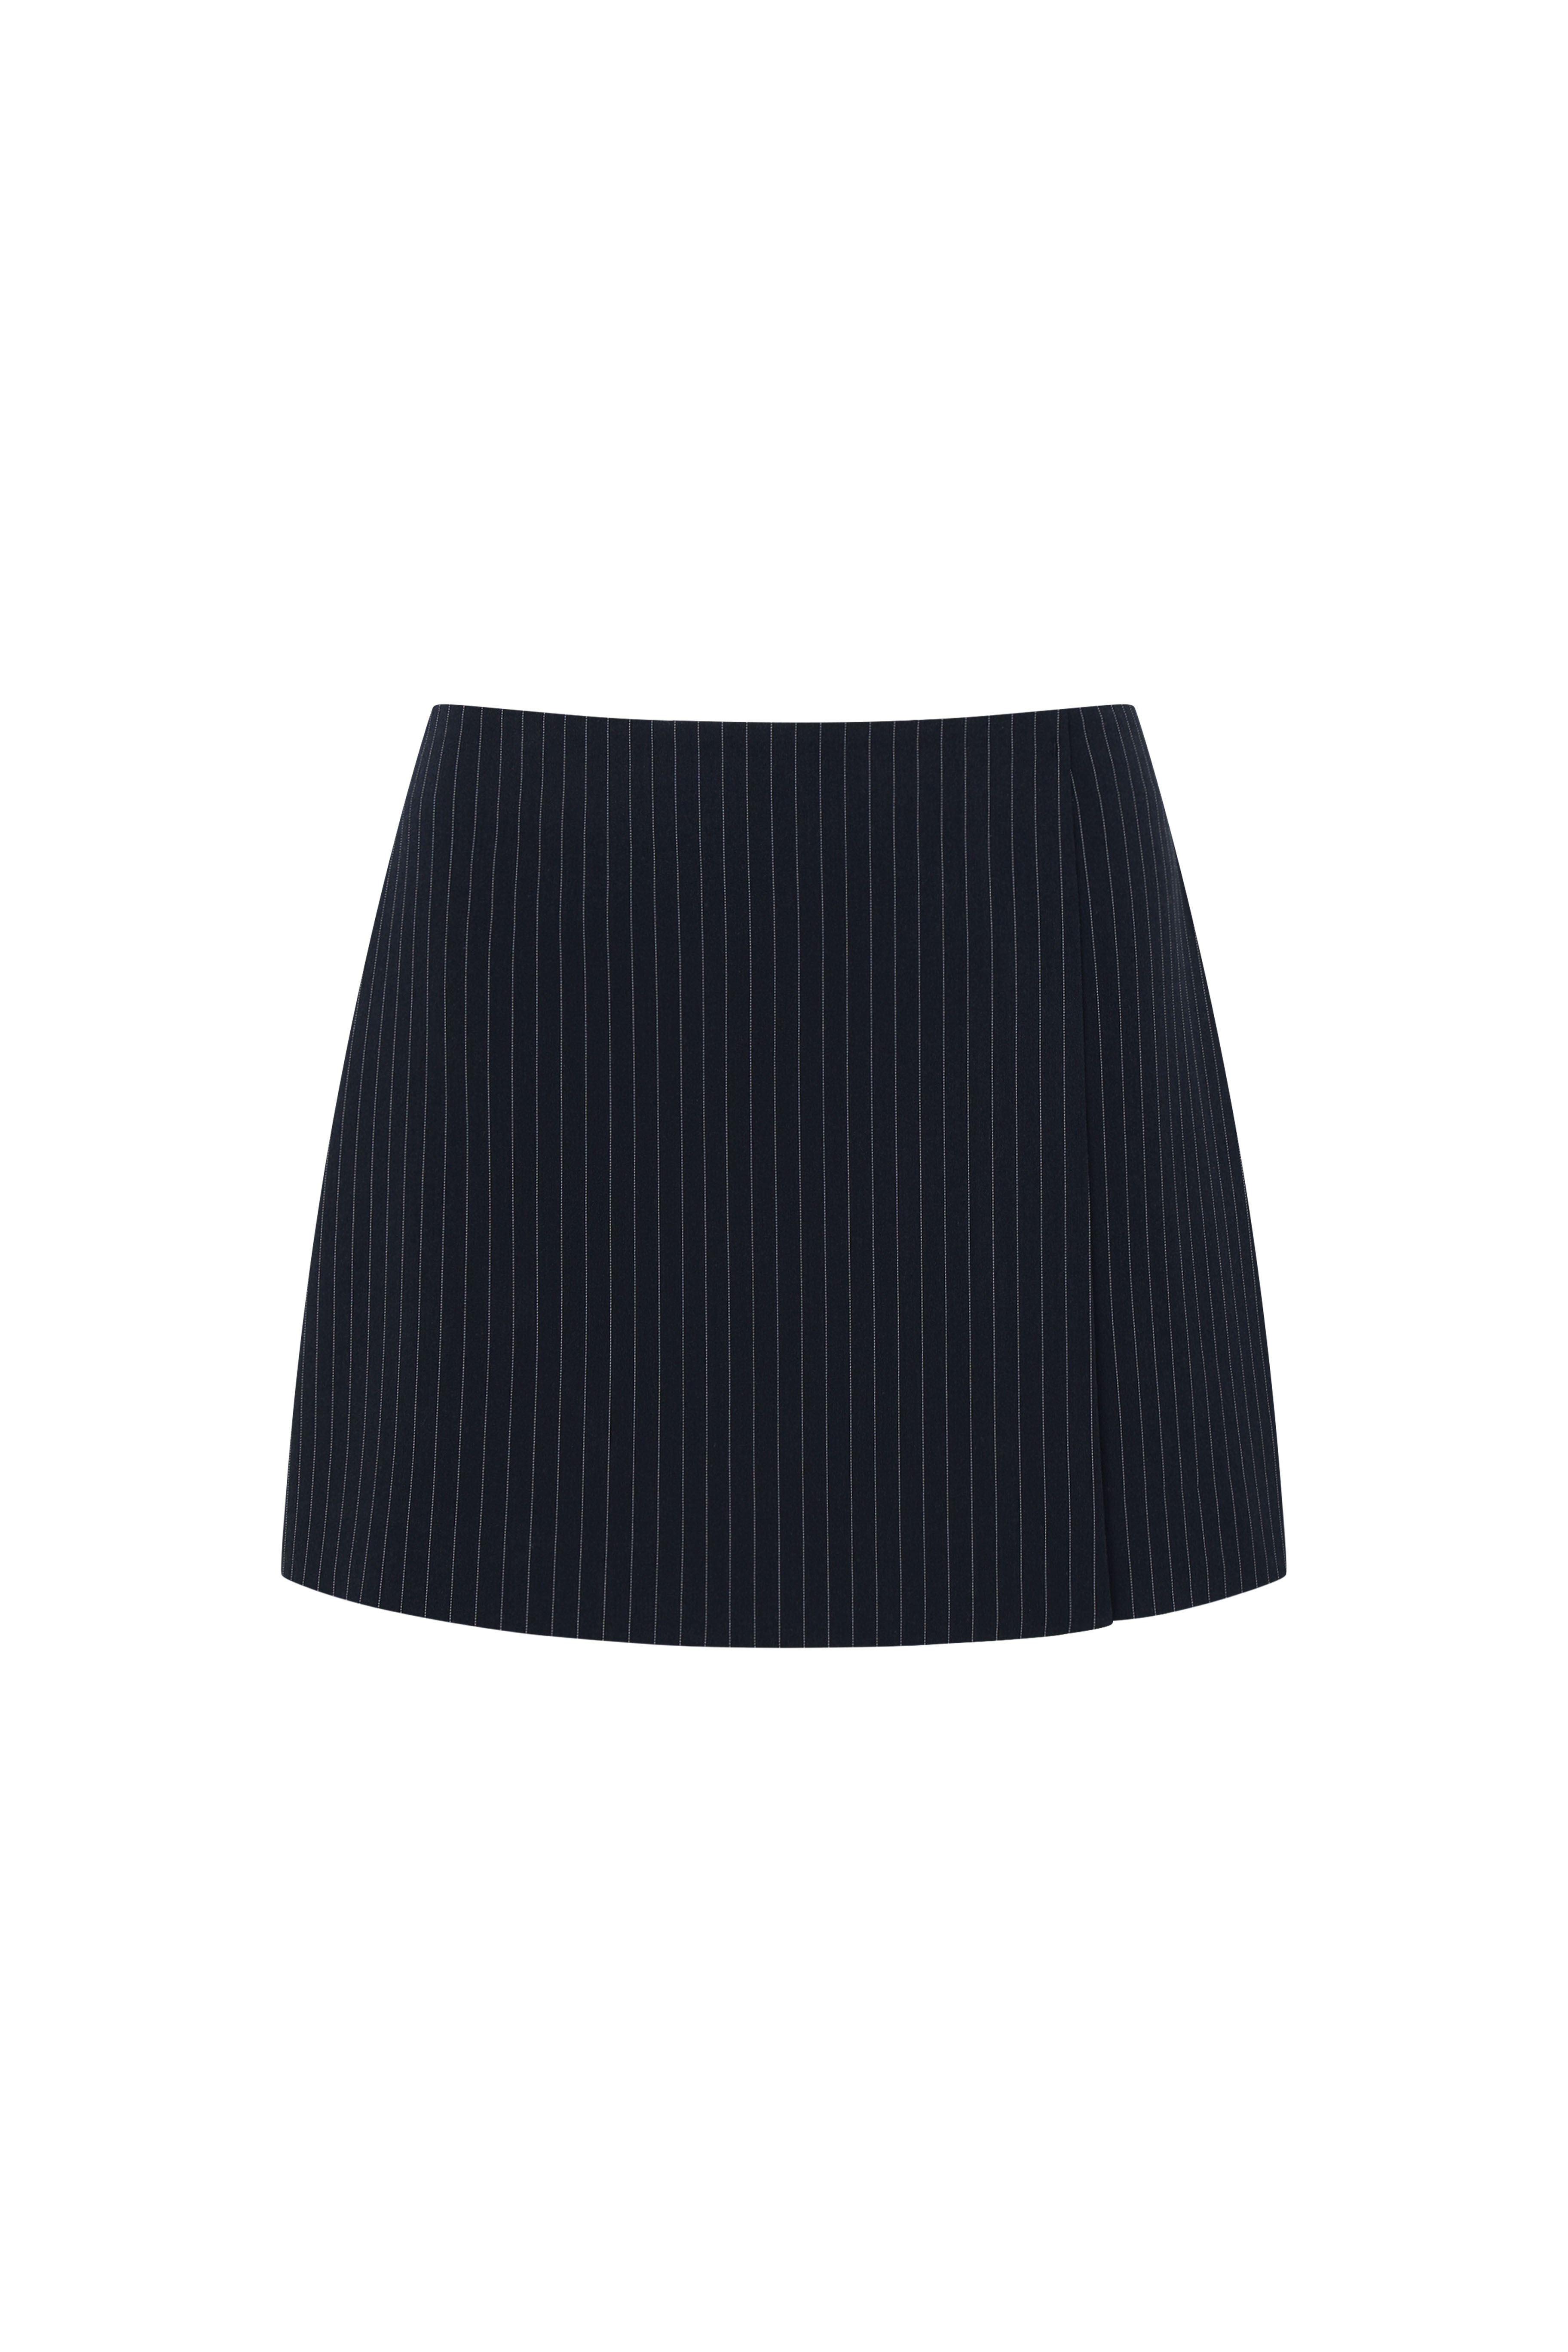 90s Classy Wrap Mini Skirt (NAVY) - 포니테일